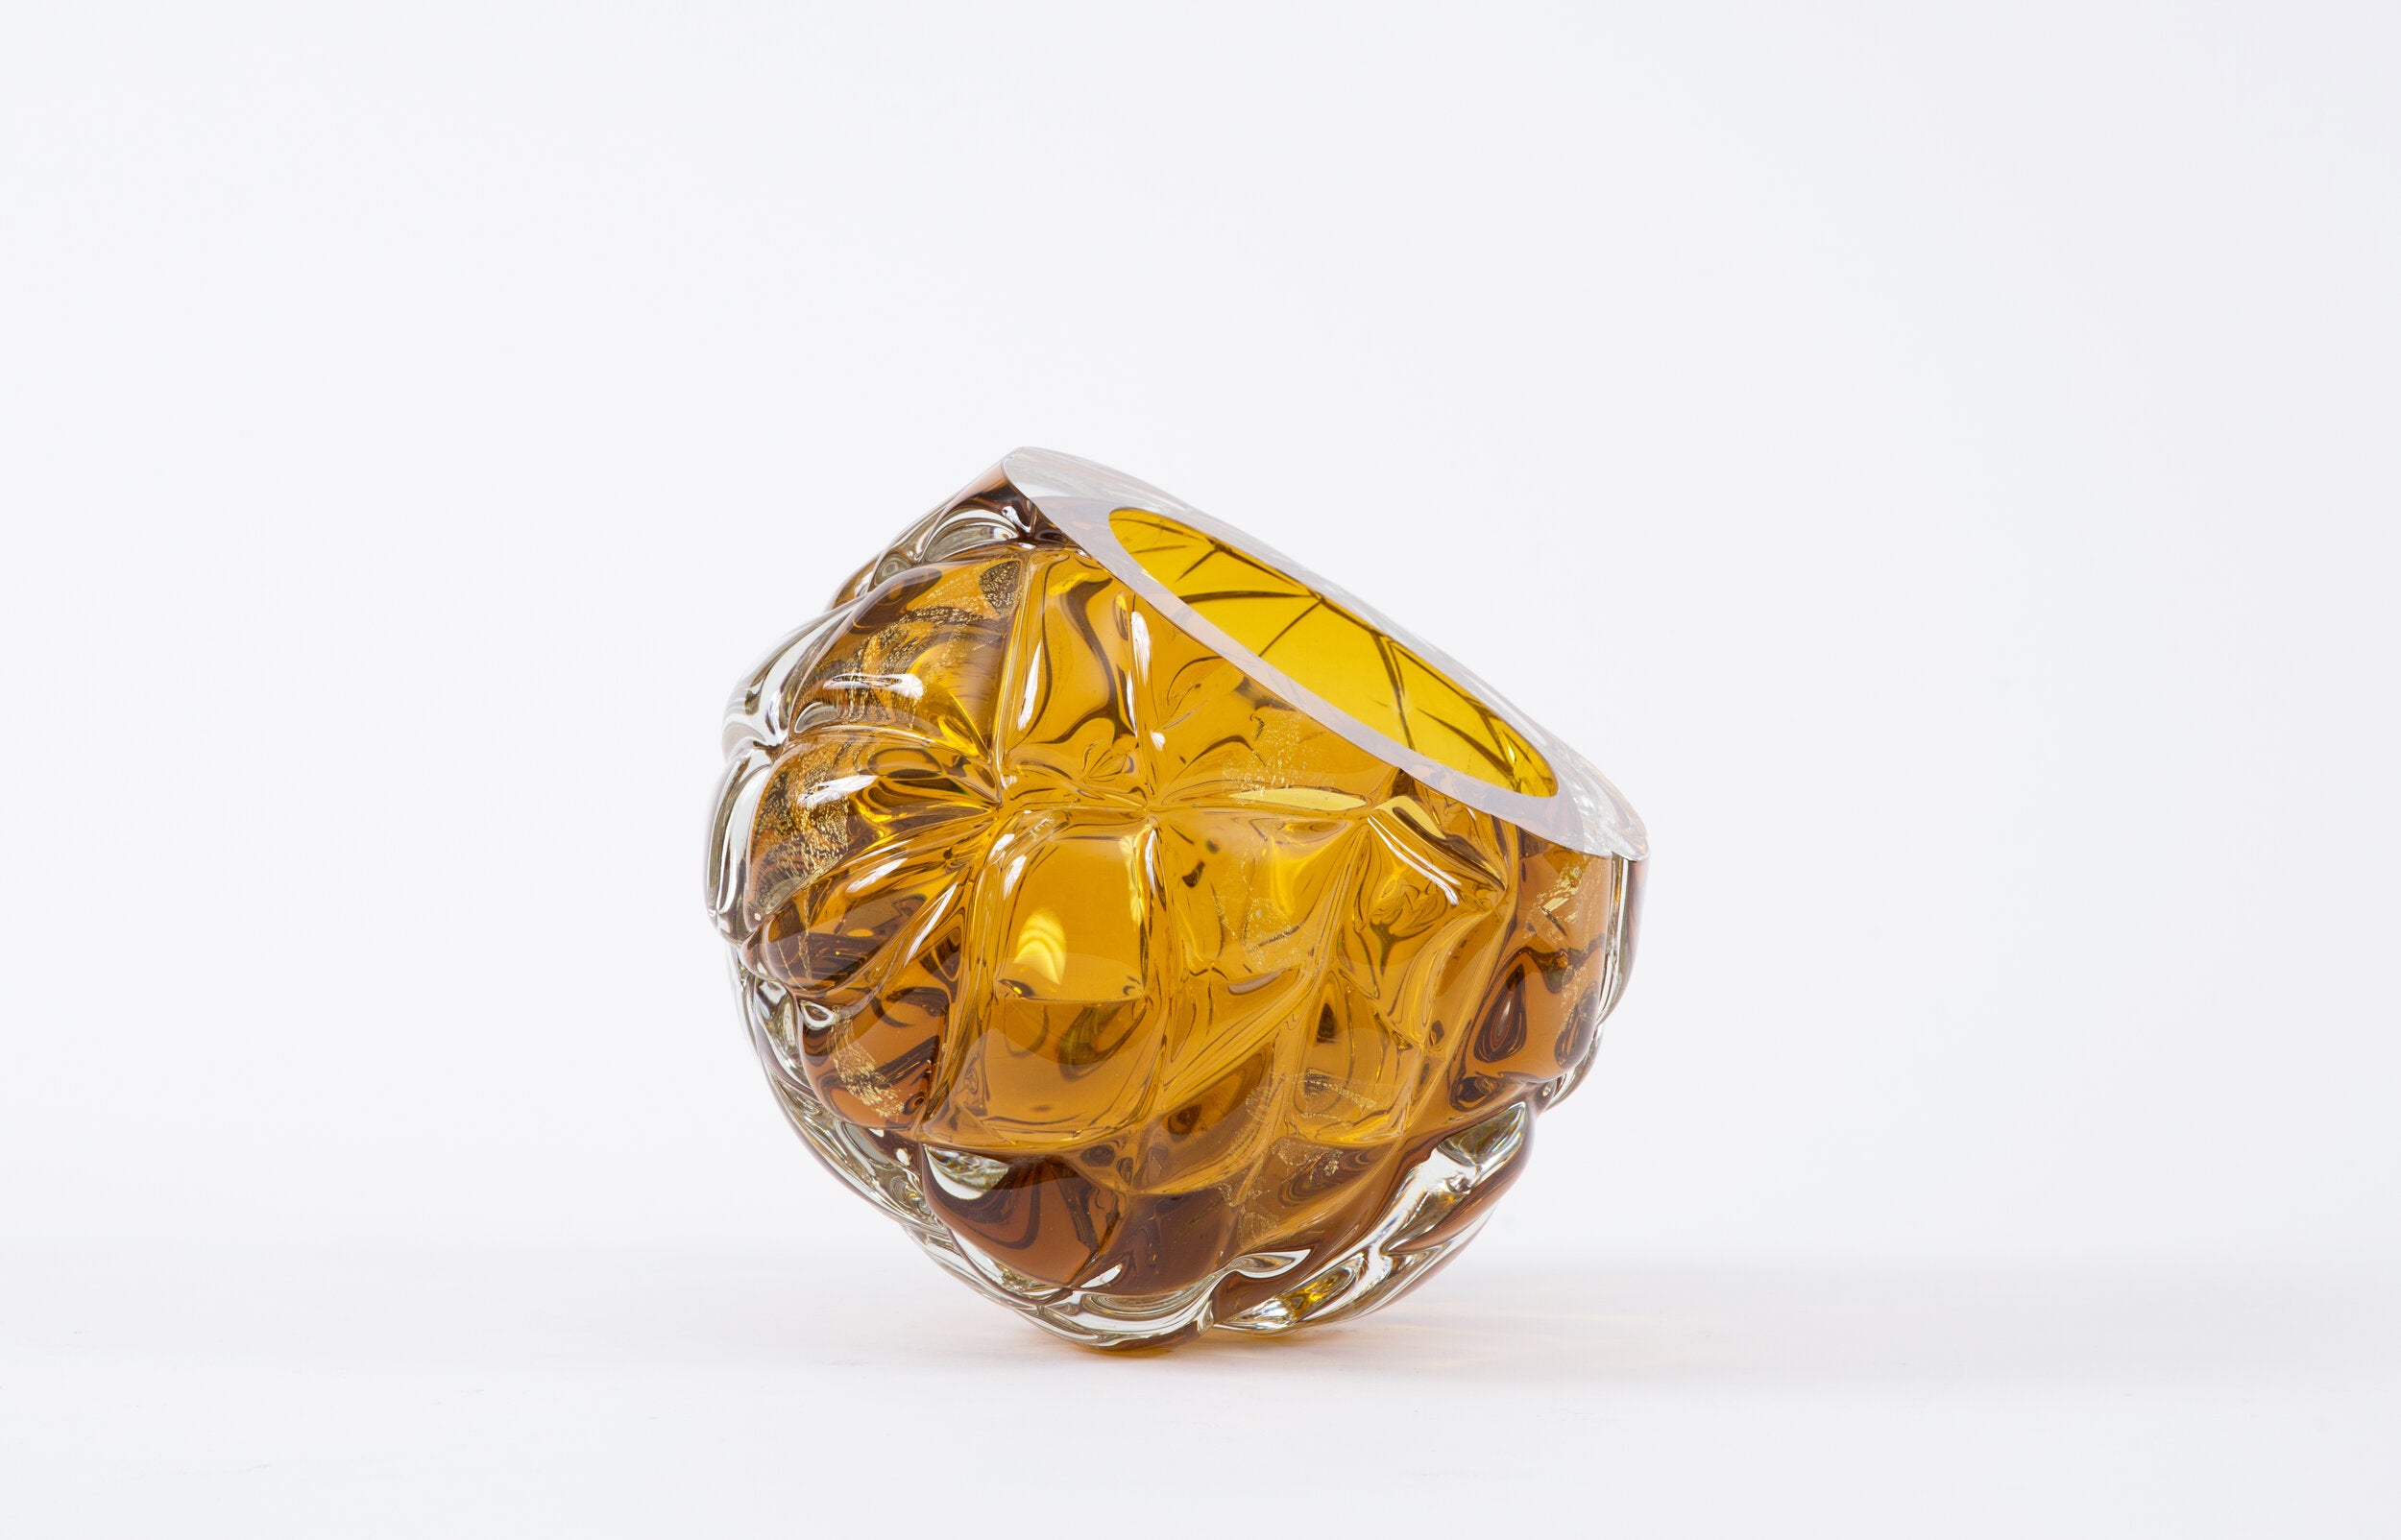 Amber Cut Vase with Gold Leaf